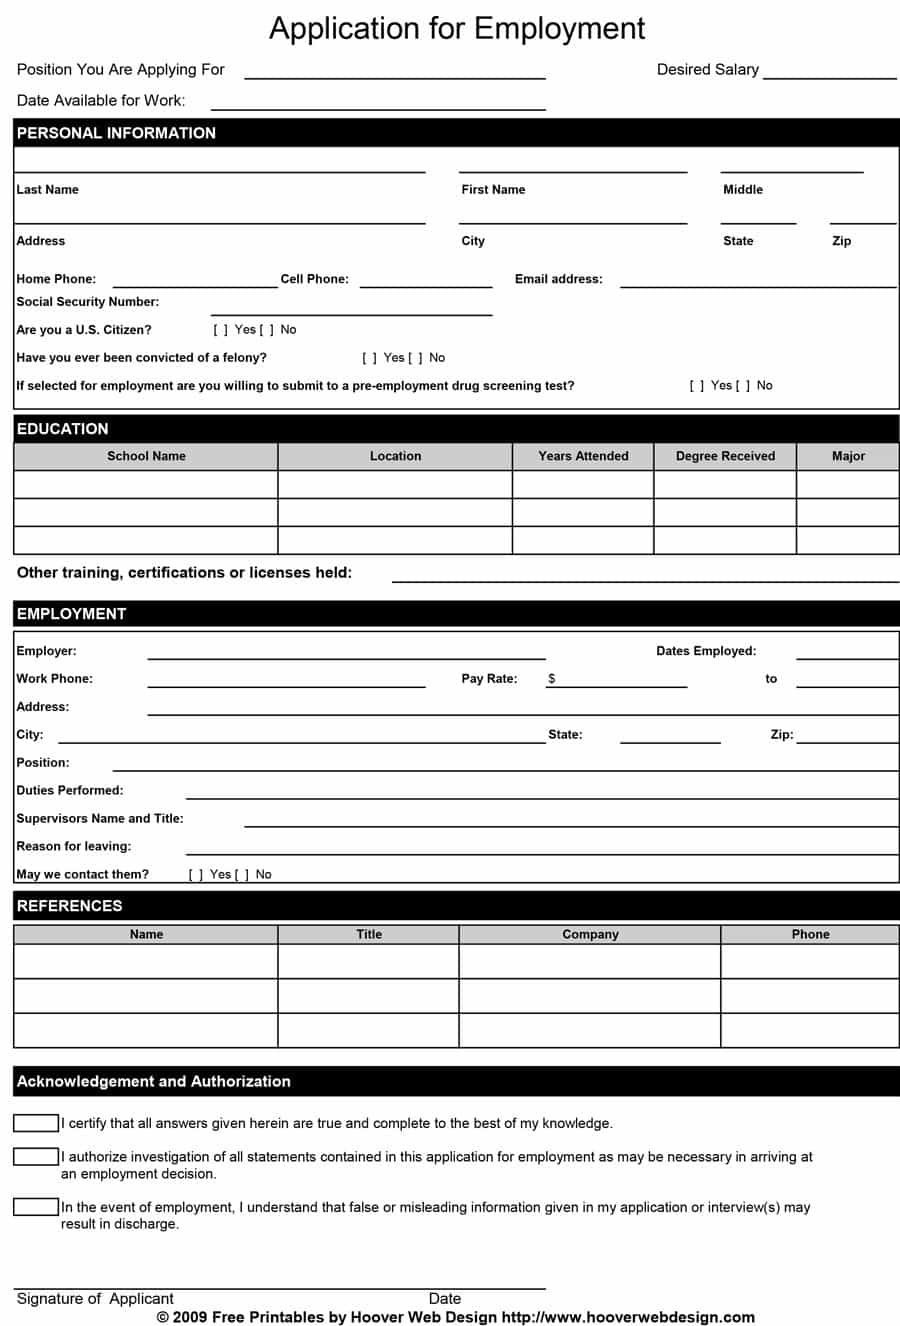 50 Free Employment / Job Application Form Templates [Printable - Free Printable Job Applications Online